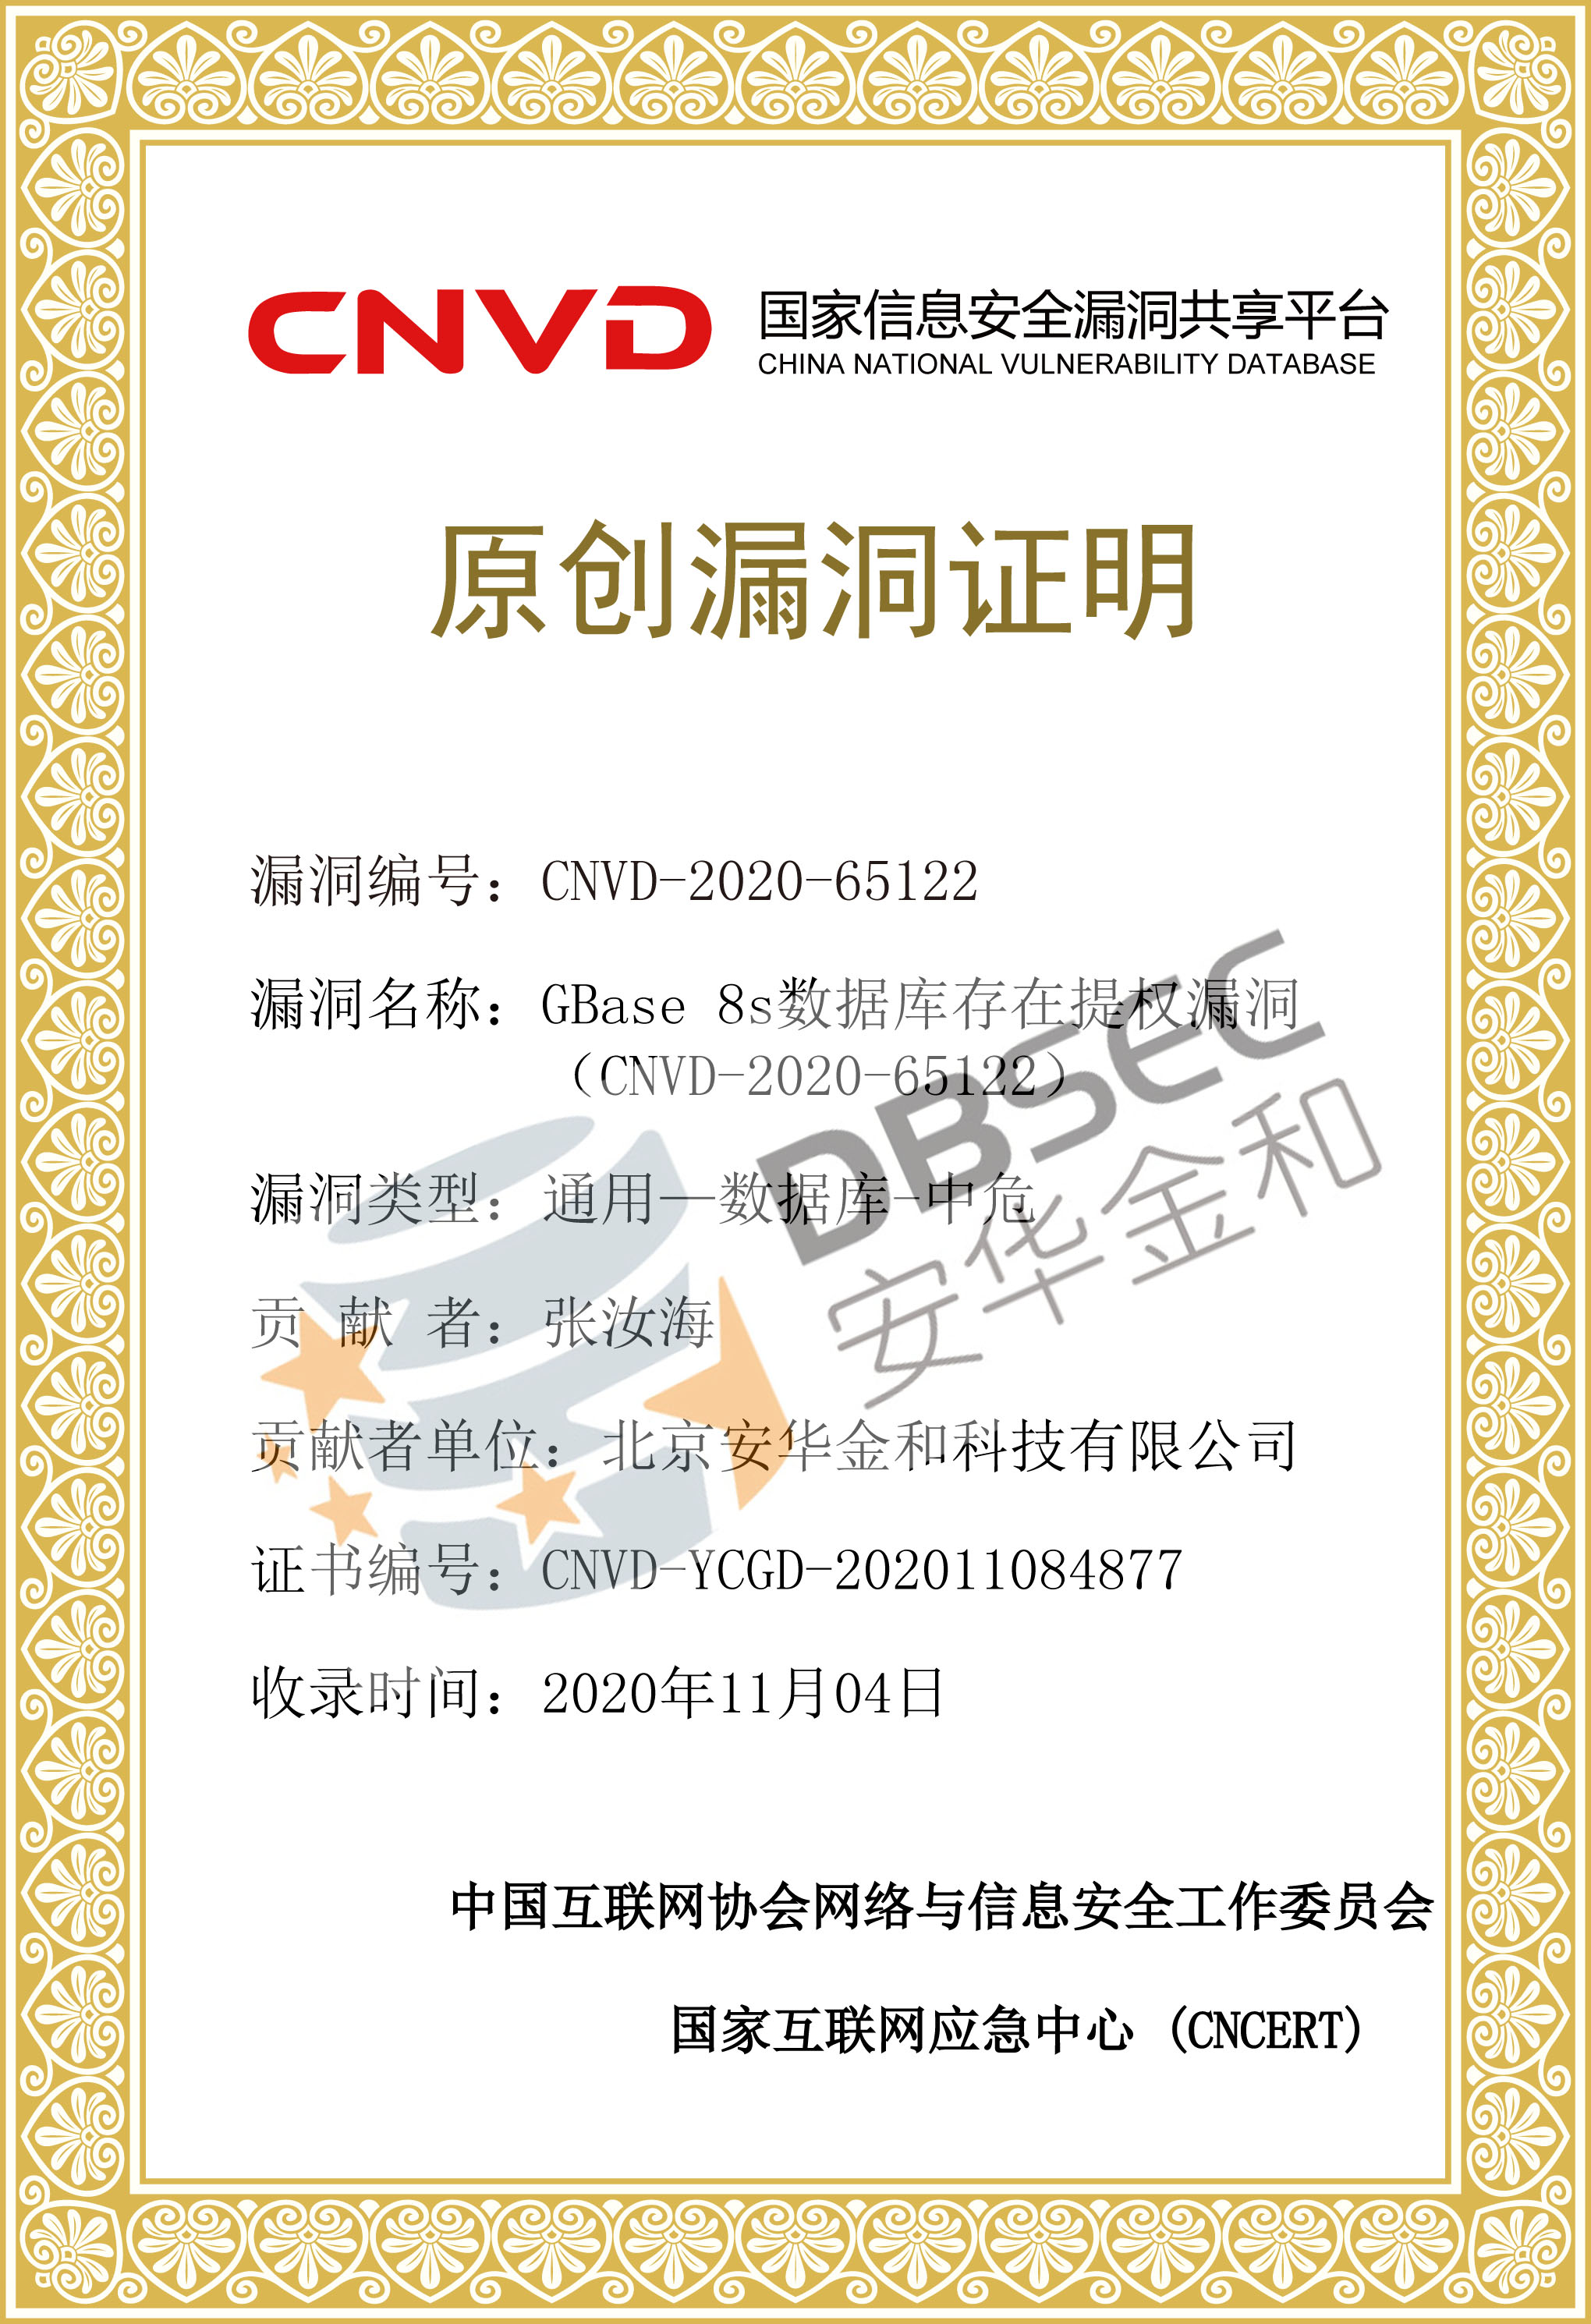 CNVD-YCGD-202011084877